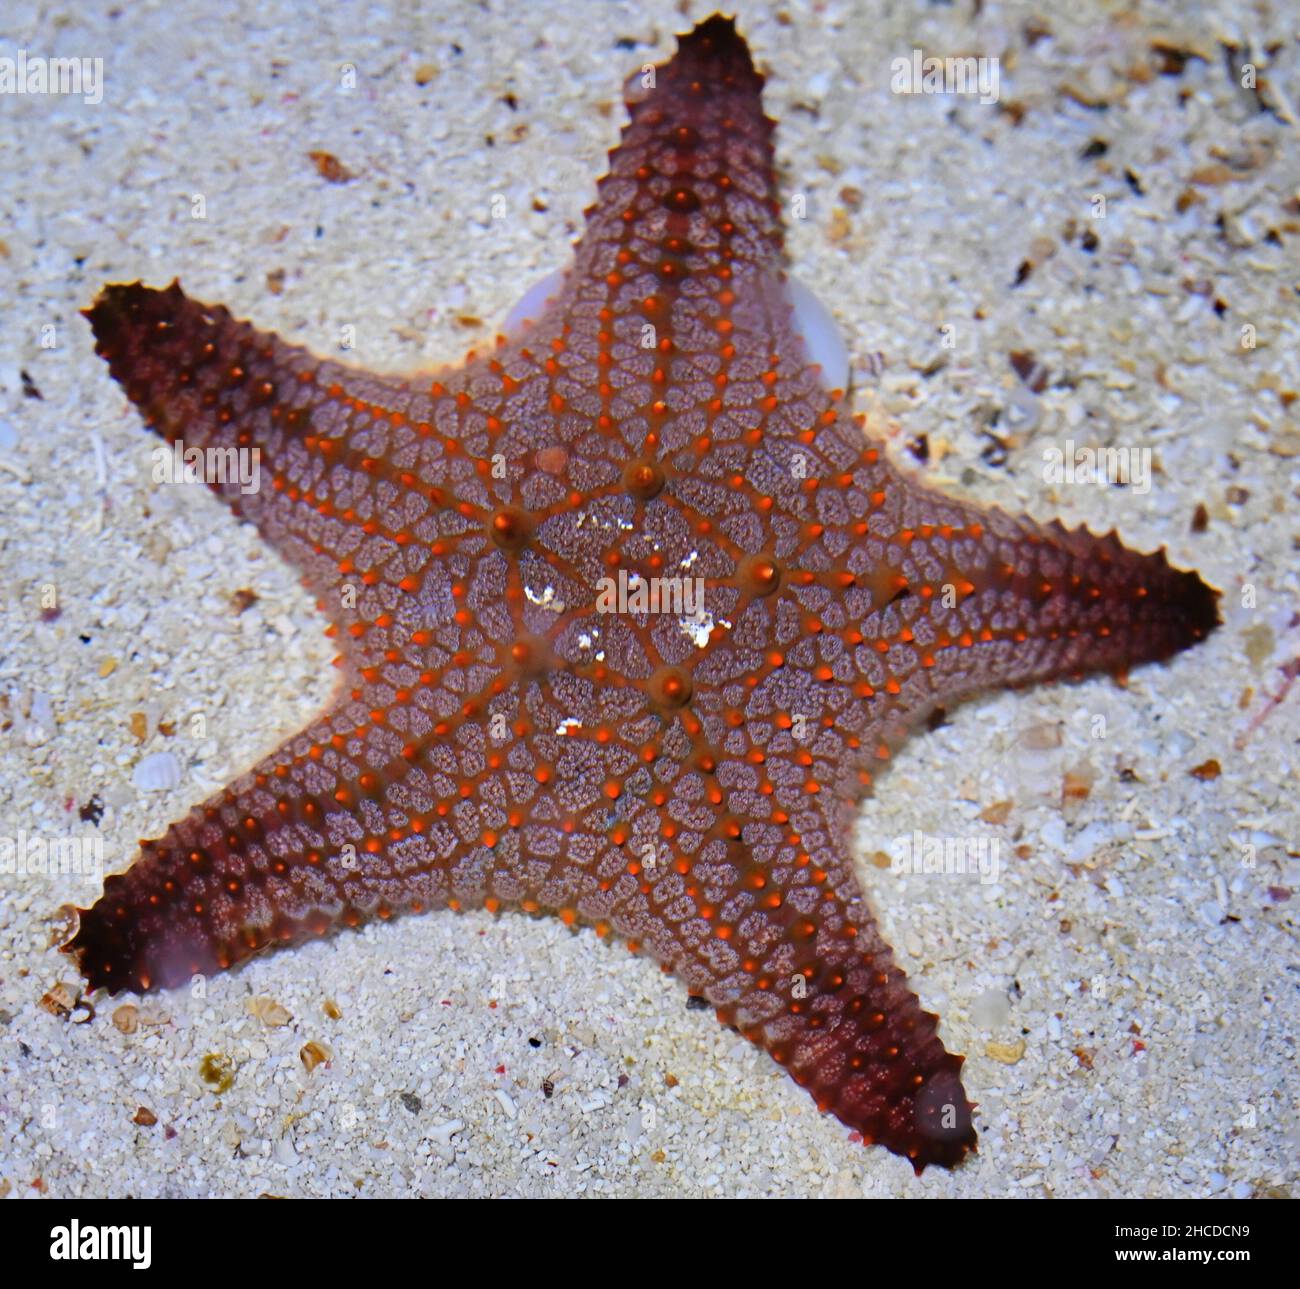 Indian Sea Star Spread on Sand Stock Photo